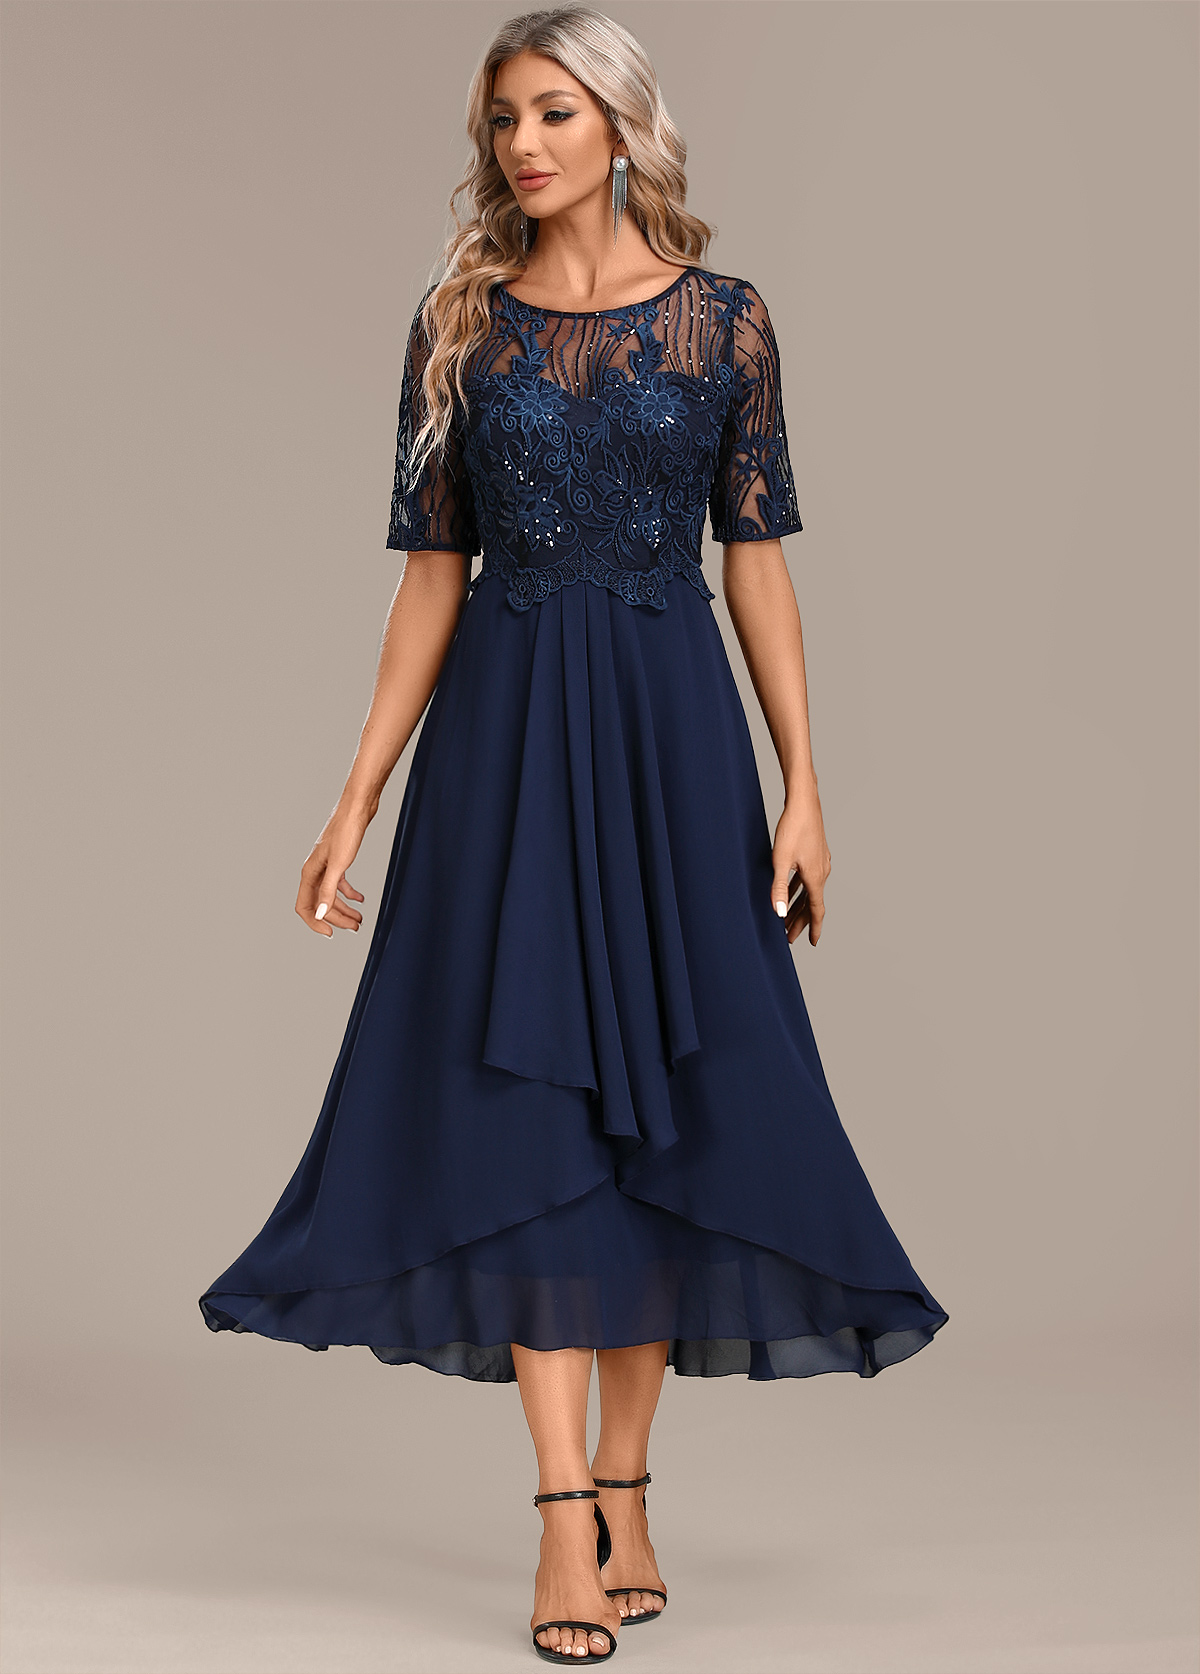 Short Sleeve Lace Navy Round Neck Dress | Rosewe.com - USD $52.98